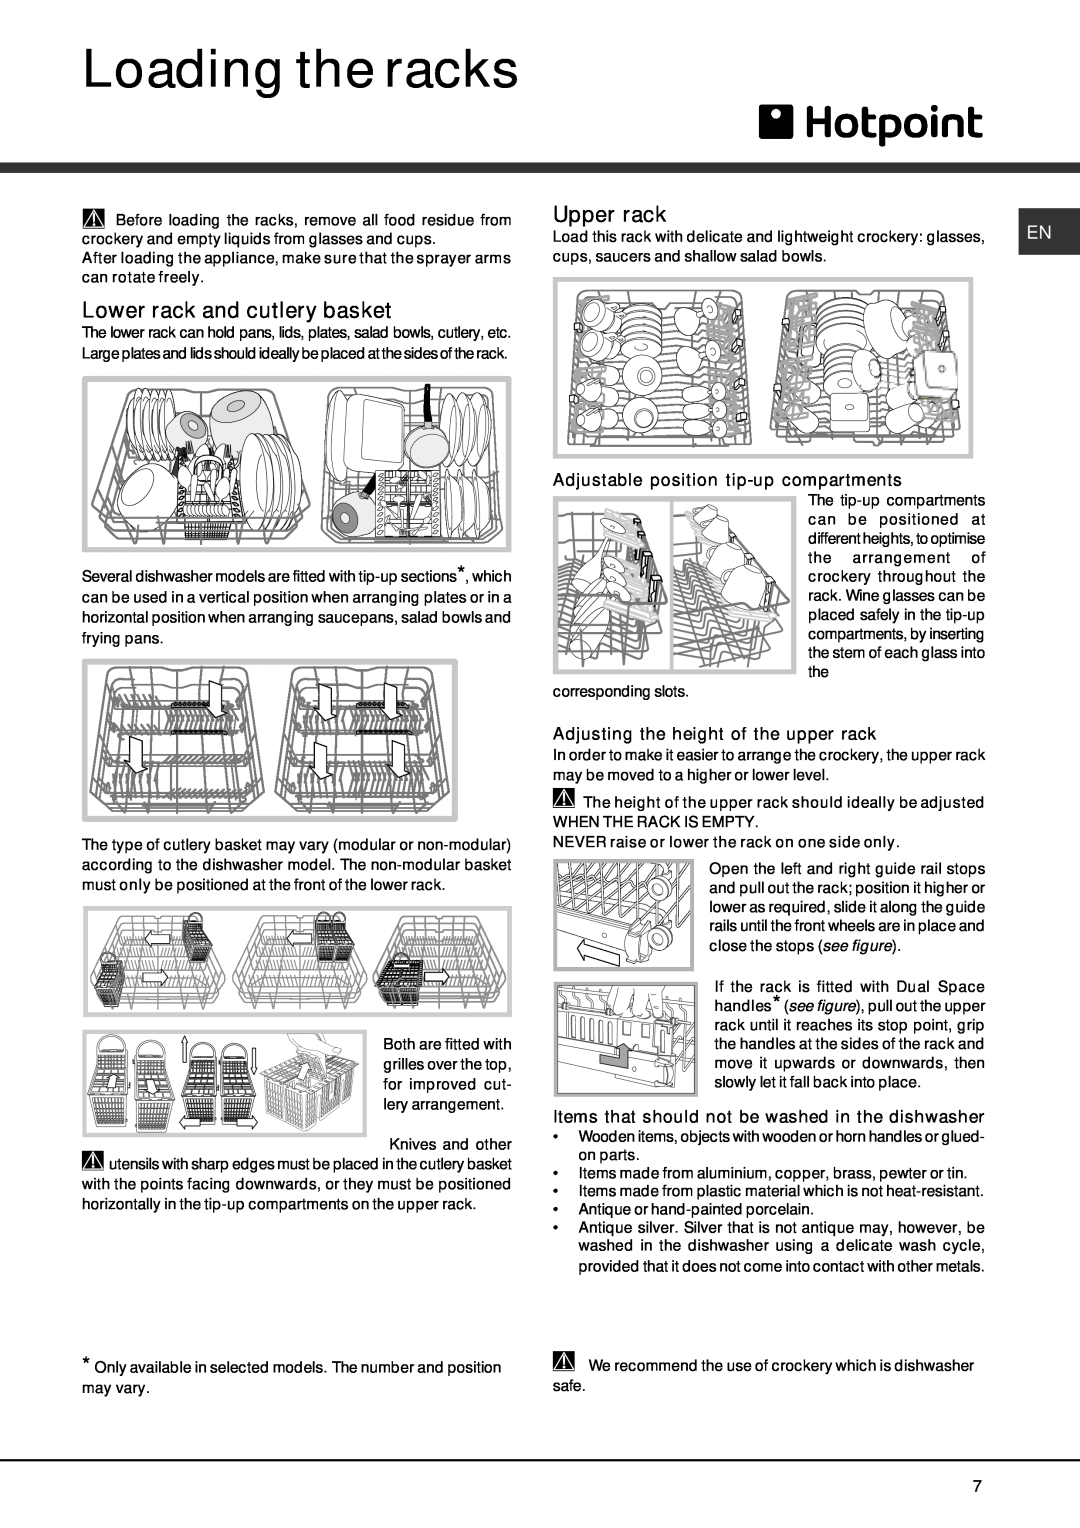 Hotpoint FDFF manual Loading the racks, Lower rack and cutlery basket, Upper rack 